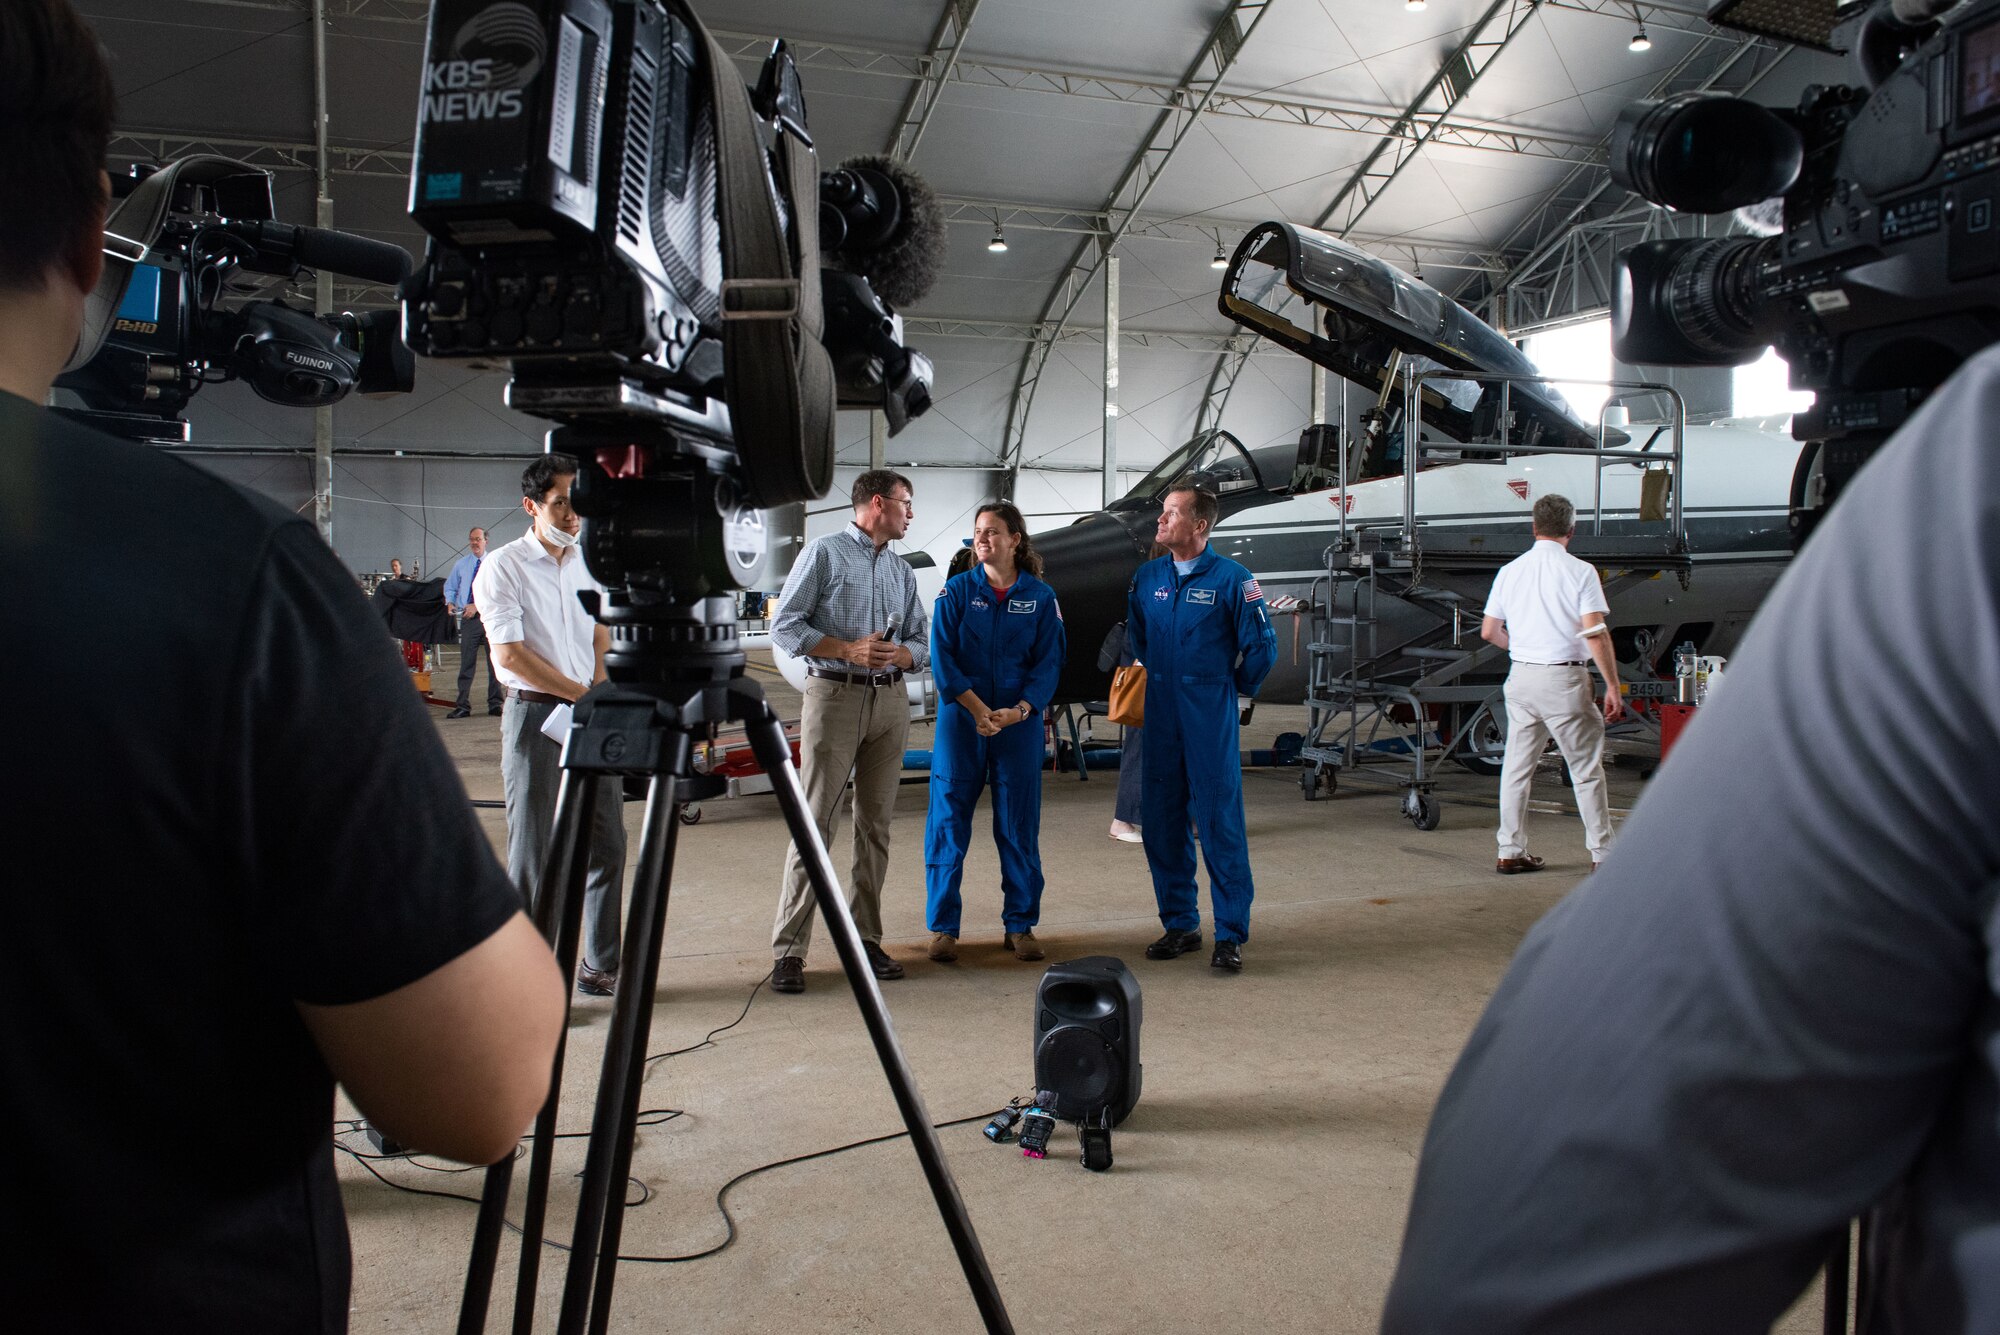 NASA representatives and pilots prepare for an interview with local news agencies during a NASA media event at Osan Air Base, Republic of Korea, Aug. 5, 2022.